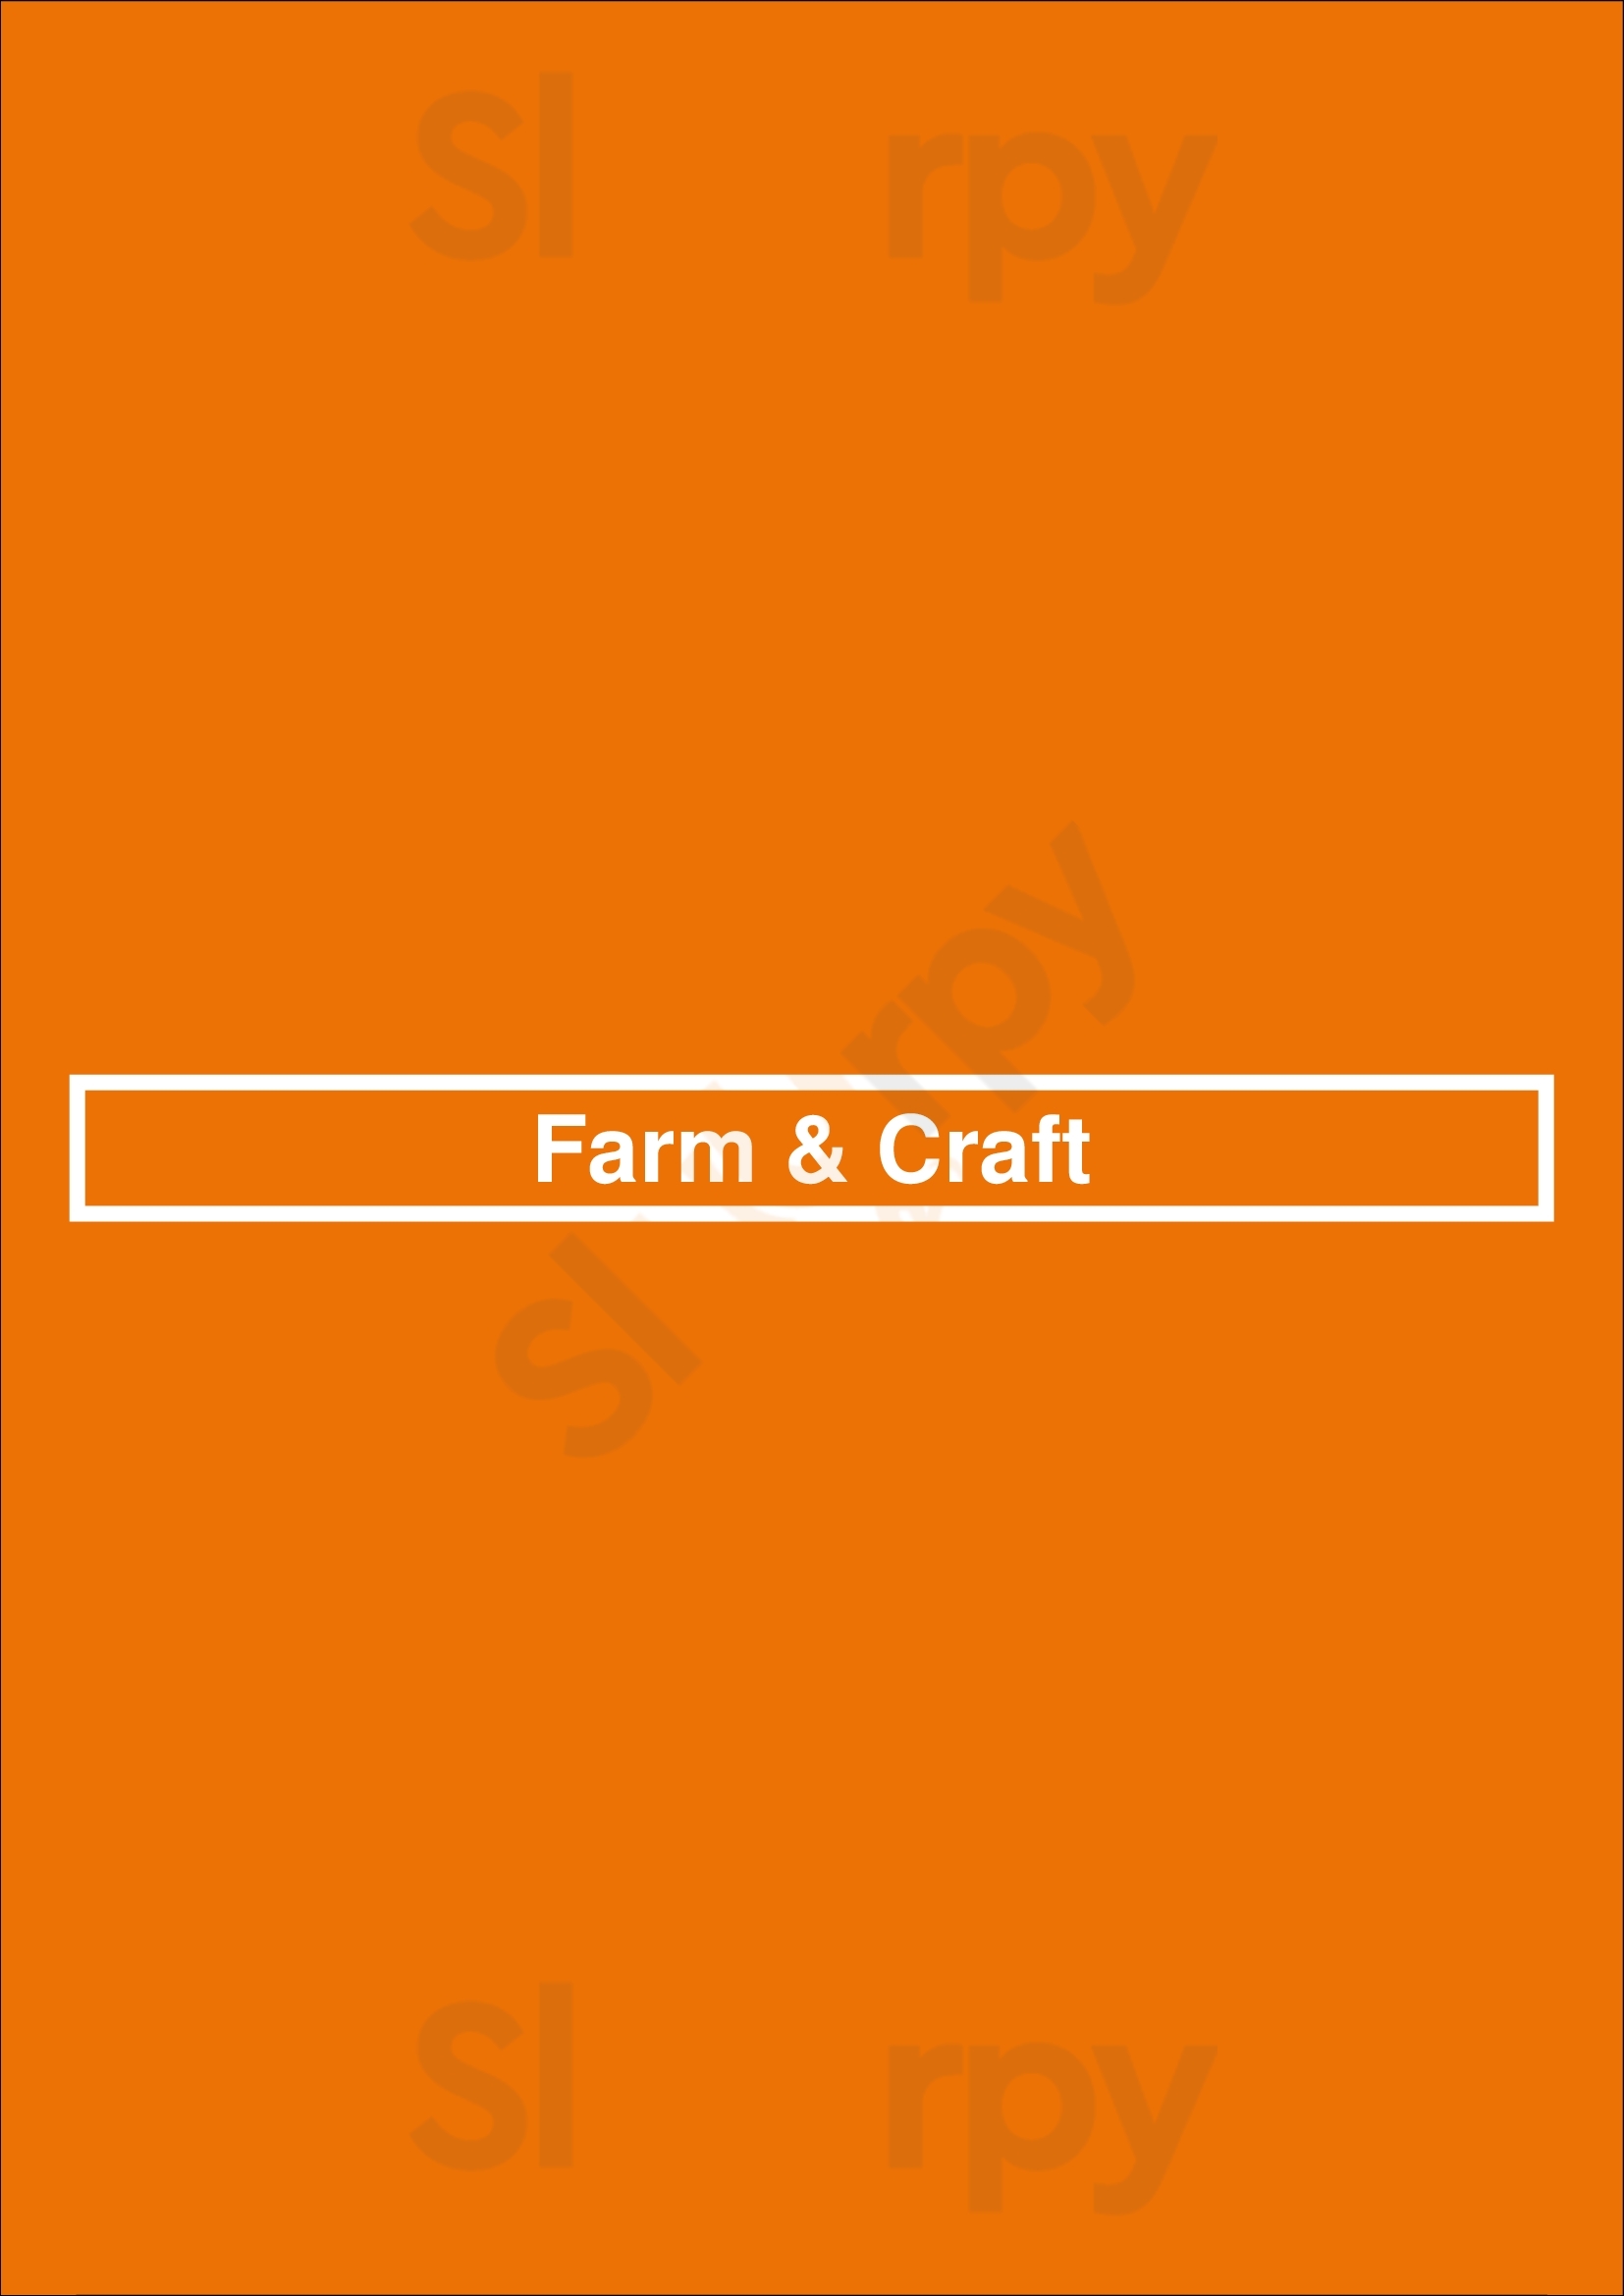 Farm & Craft Scottsdale Menu - 1